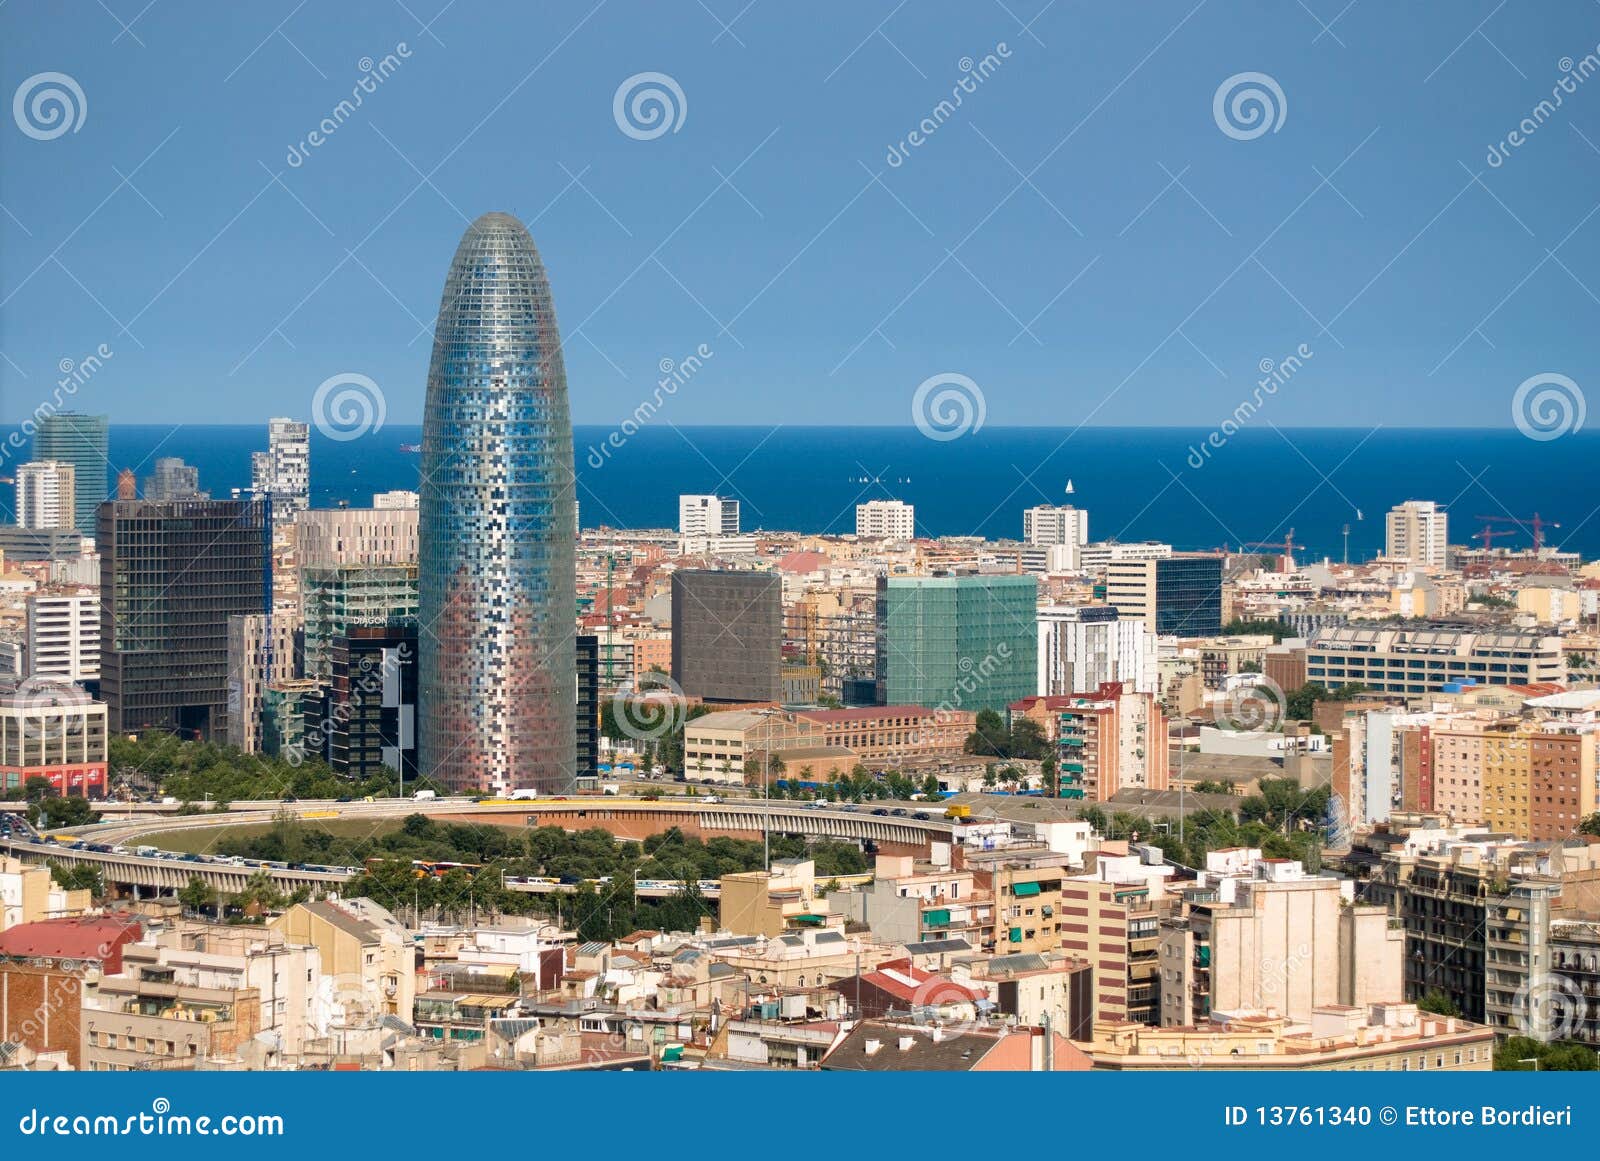 Resultado de imagen para paisaje de barcelona